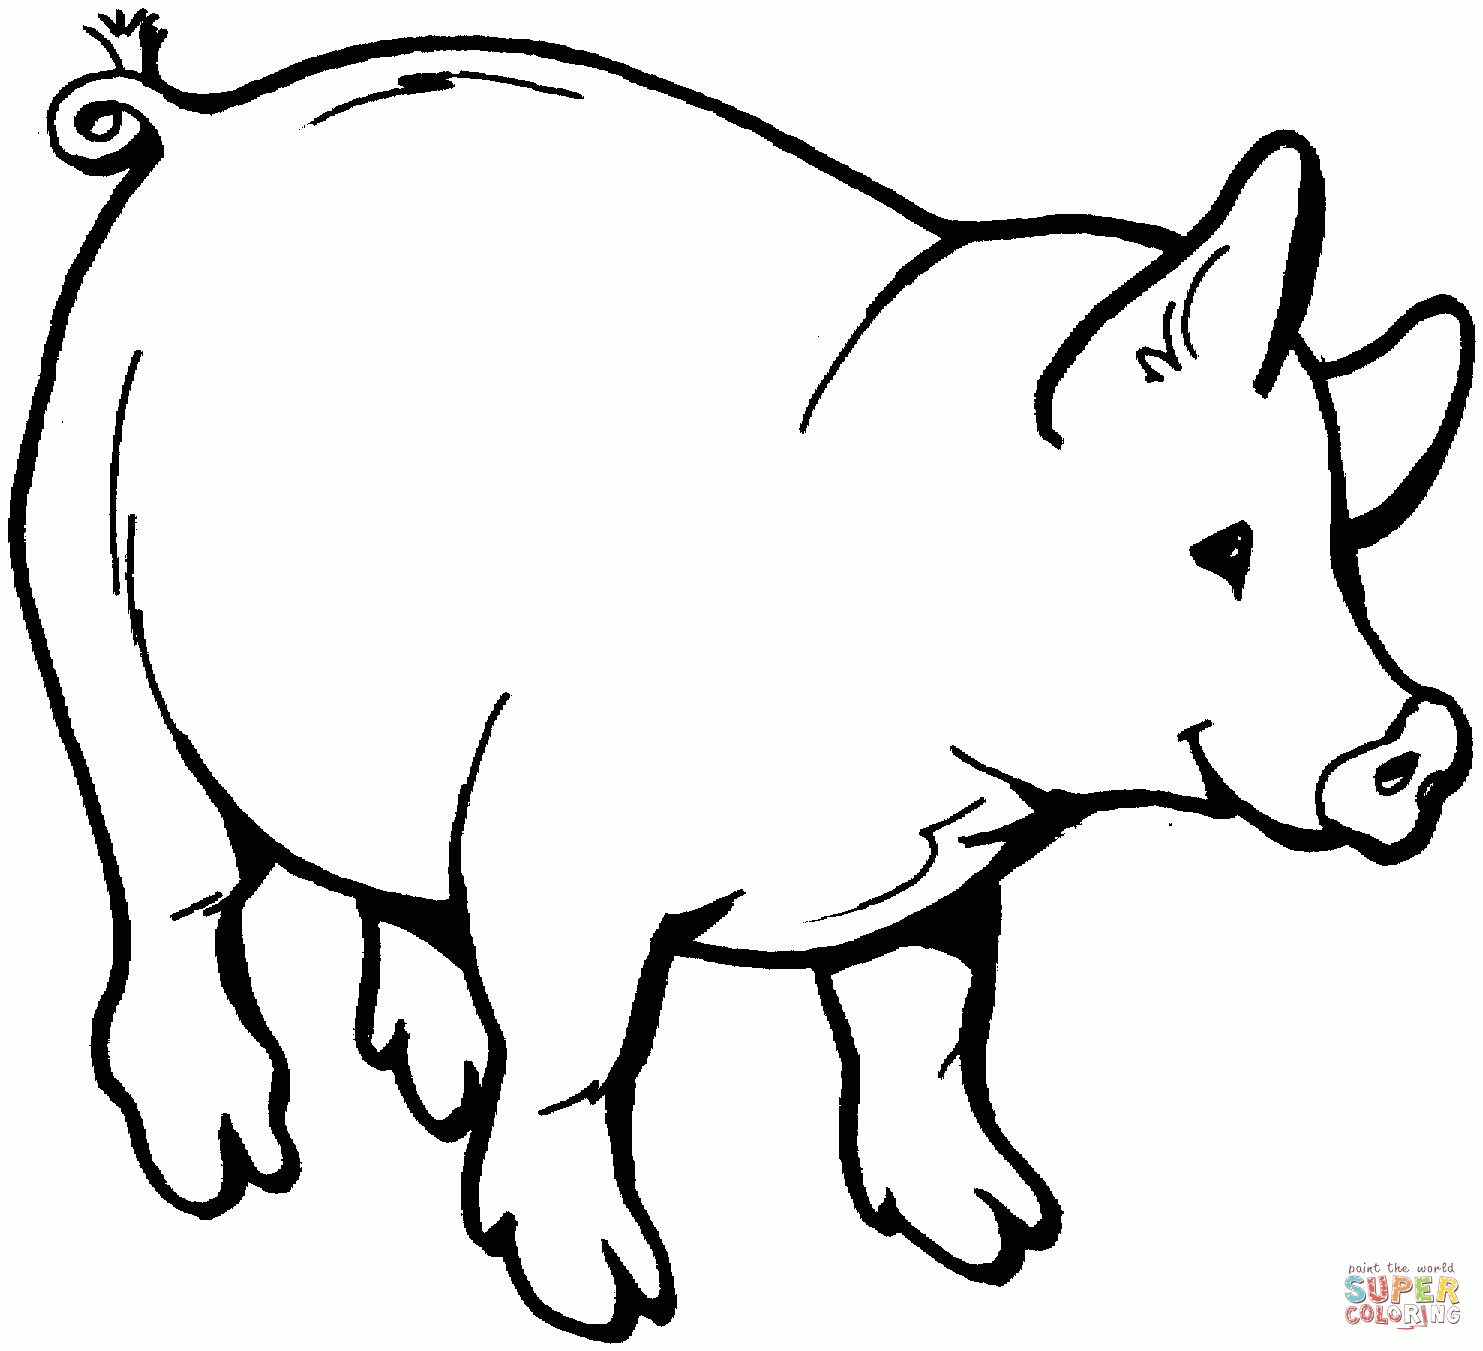 Pig Coloring Pages | Free Coloring Pages - Pig Coloring Sheets Free Printable